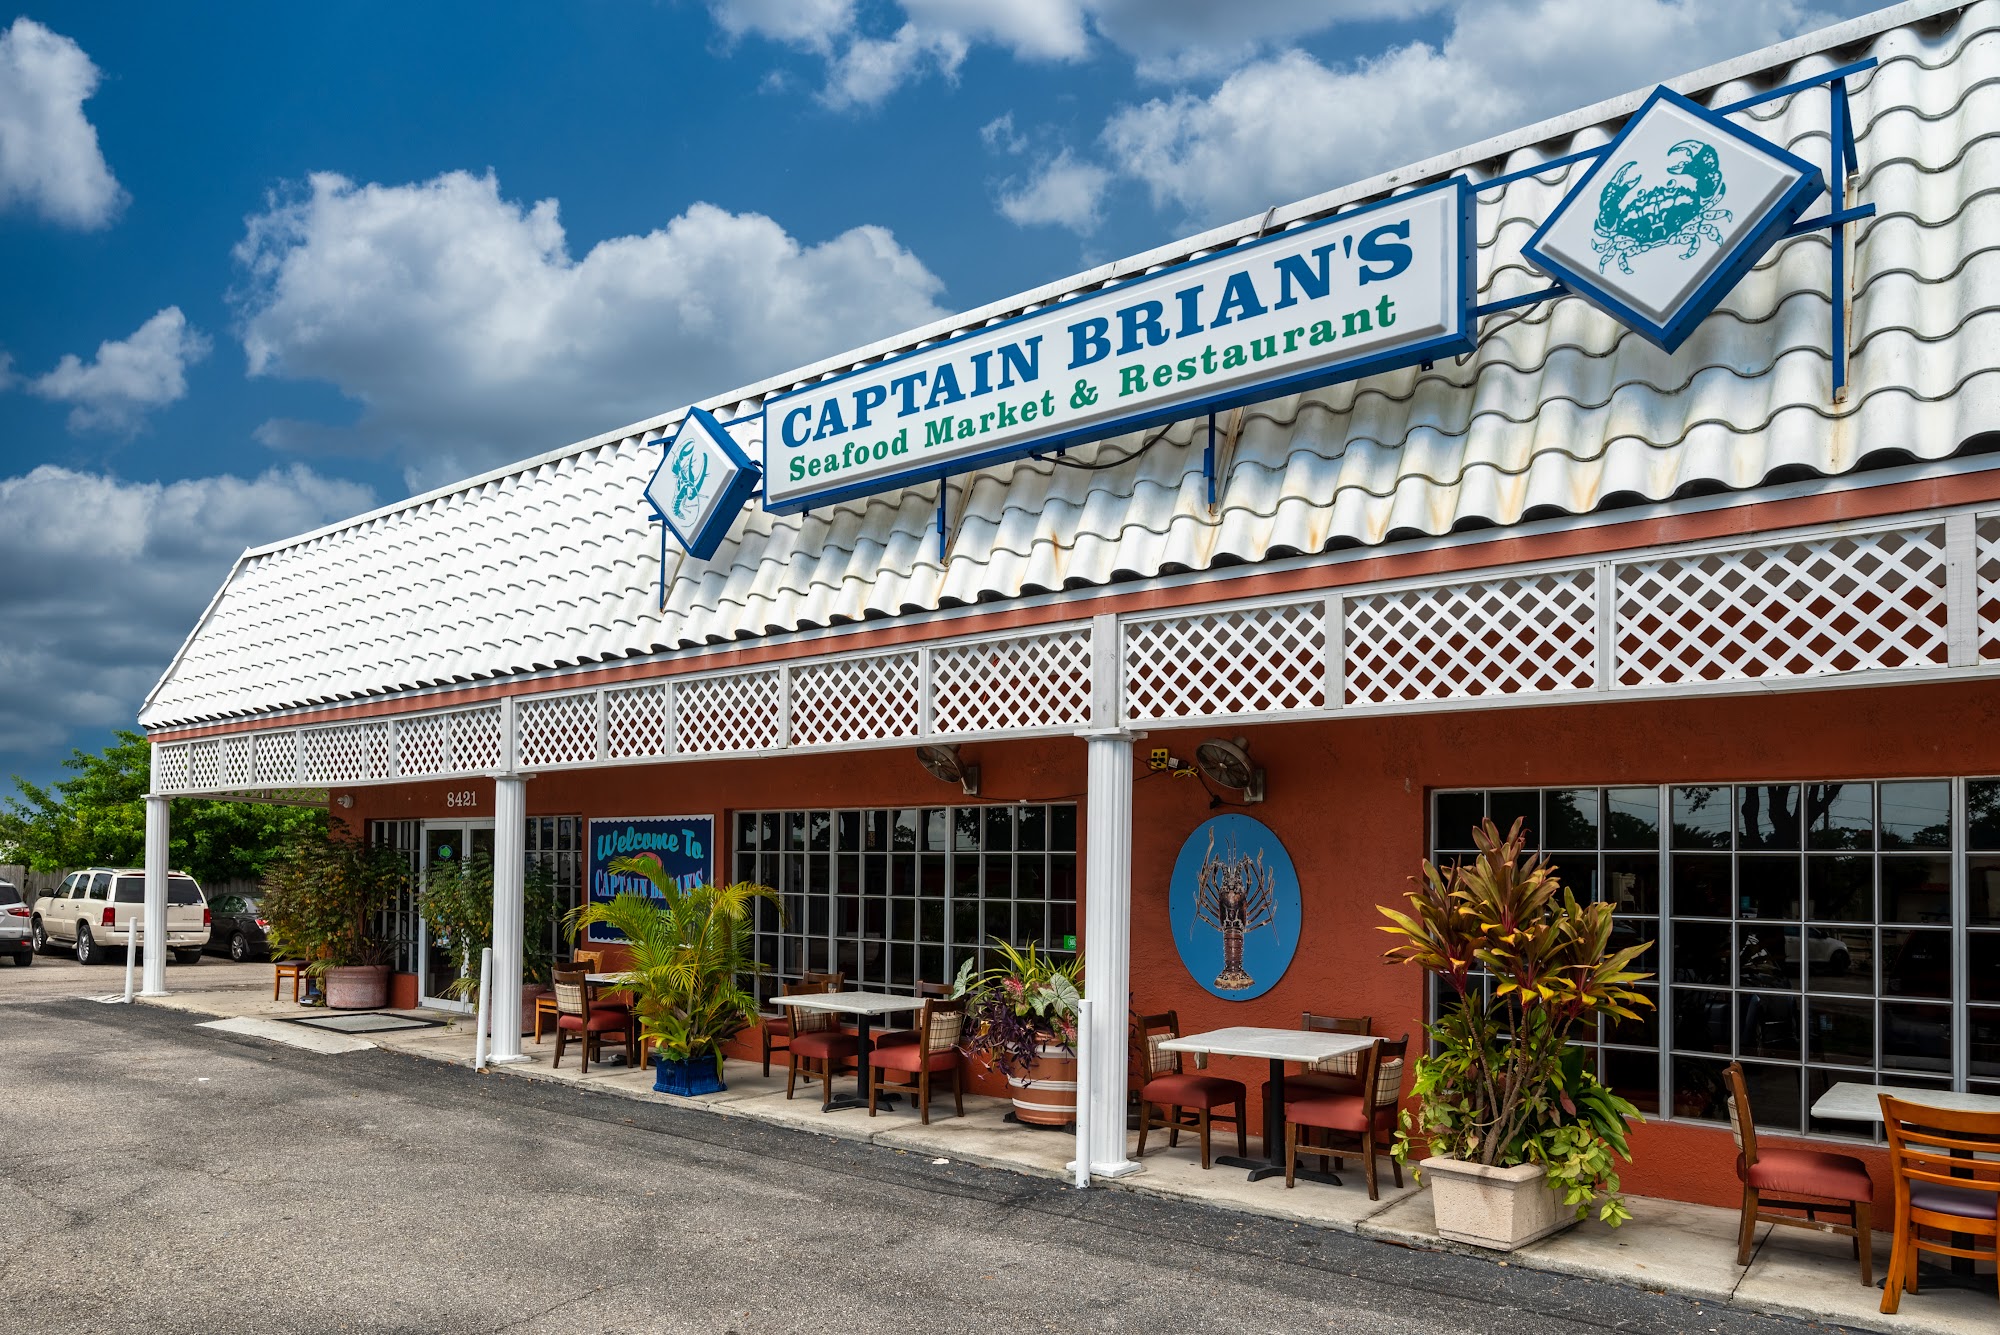 Captain Brian's Seafood Market & Restaurant